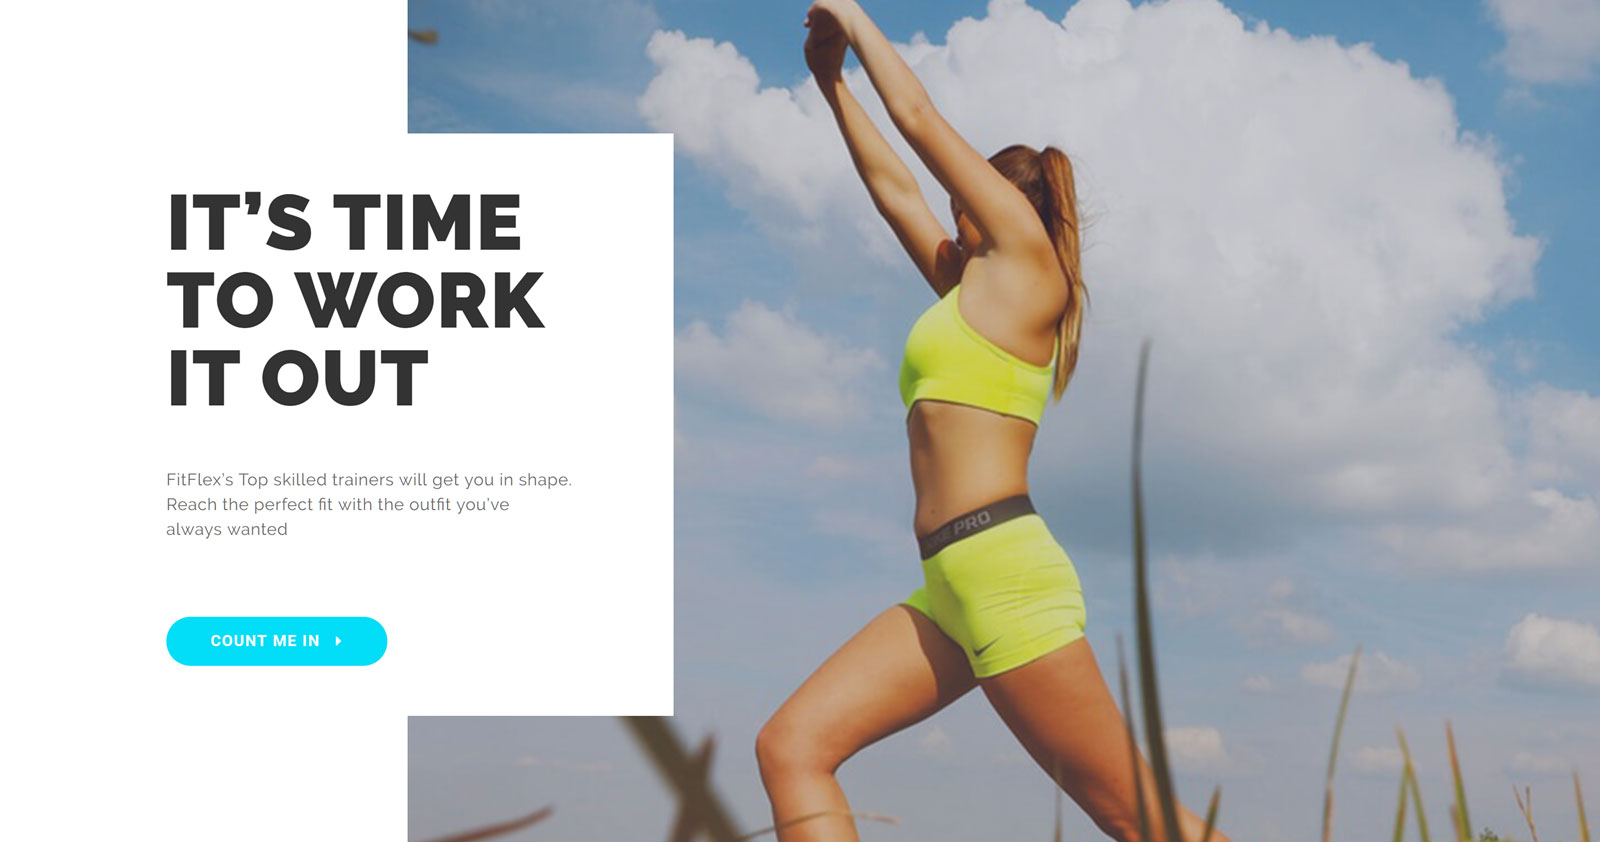 Fitness Homepage